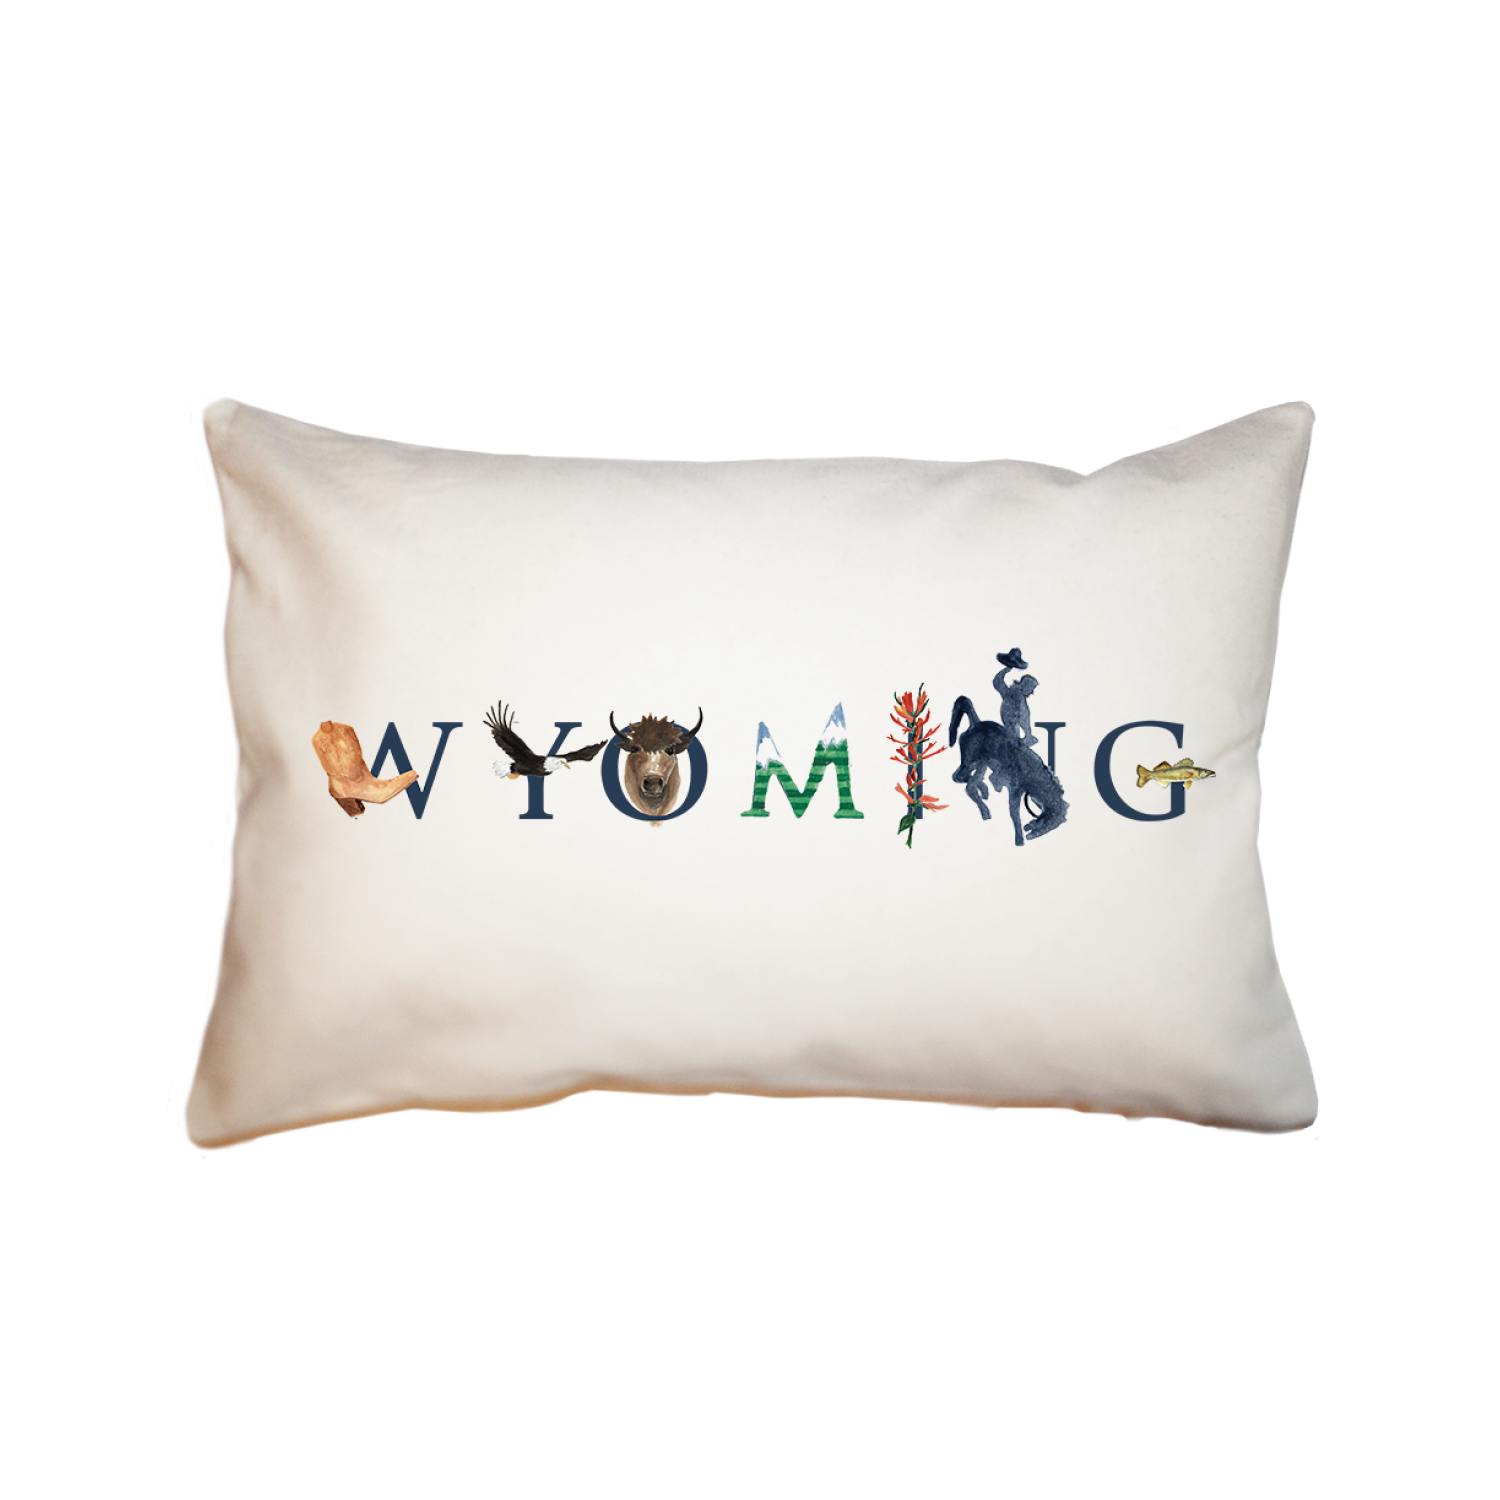 Wyoming large rectangle pillow